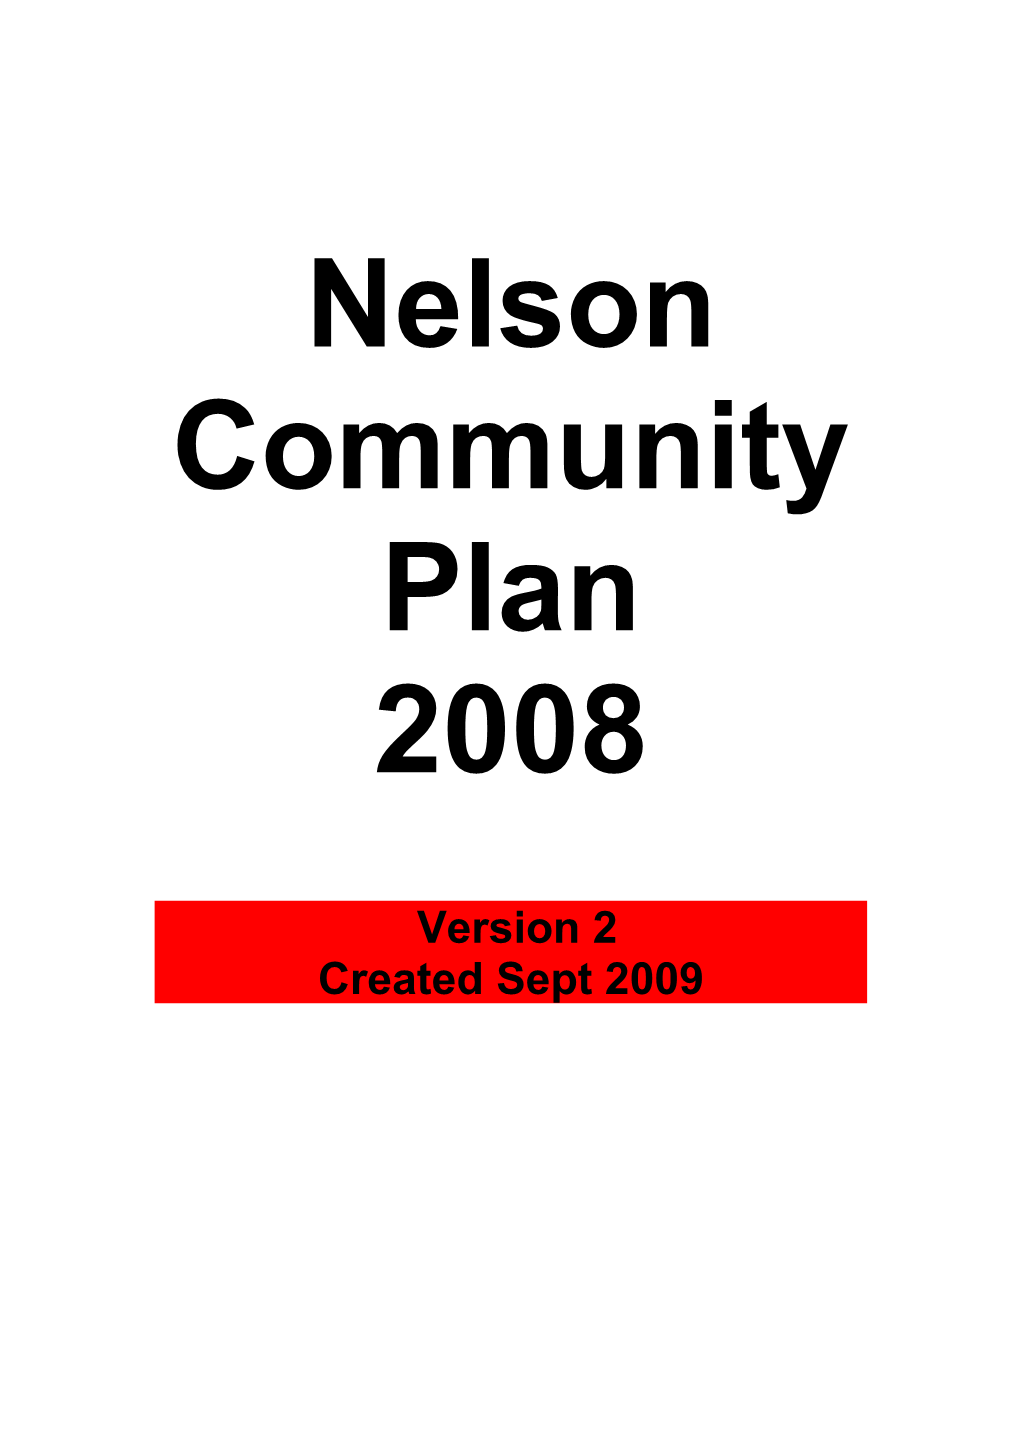 Nelson Community Plan Version 2